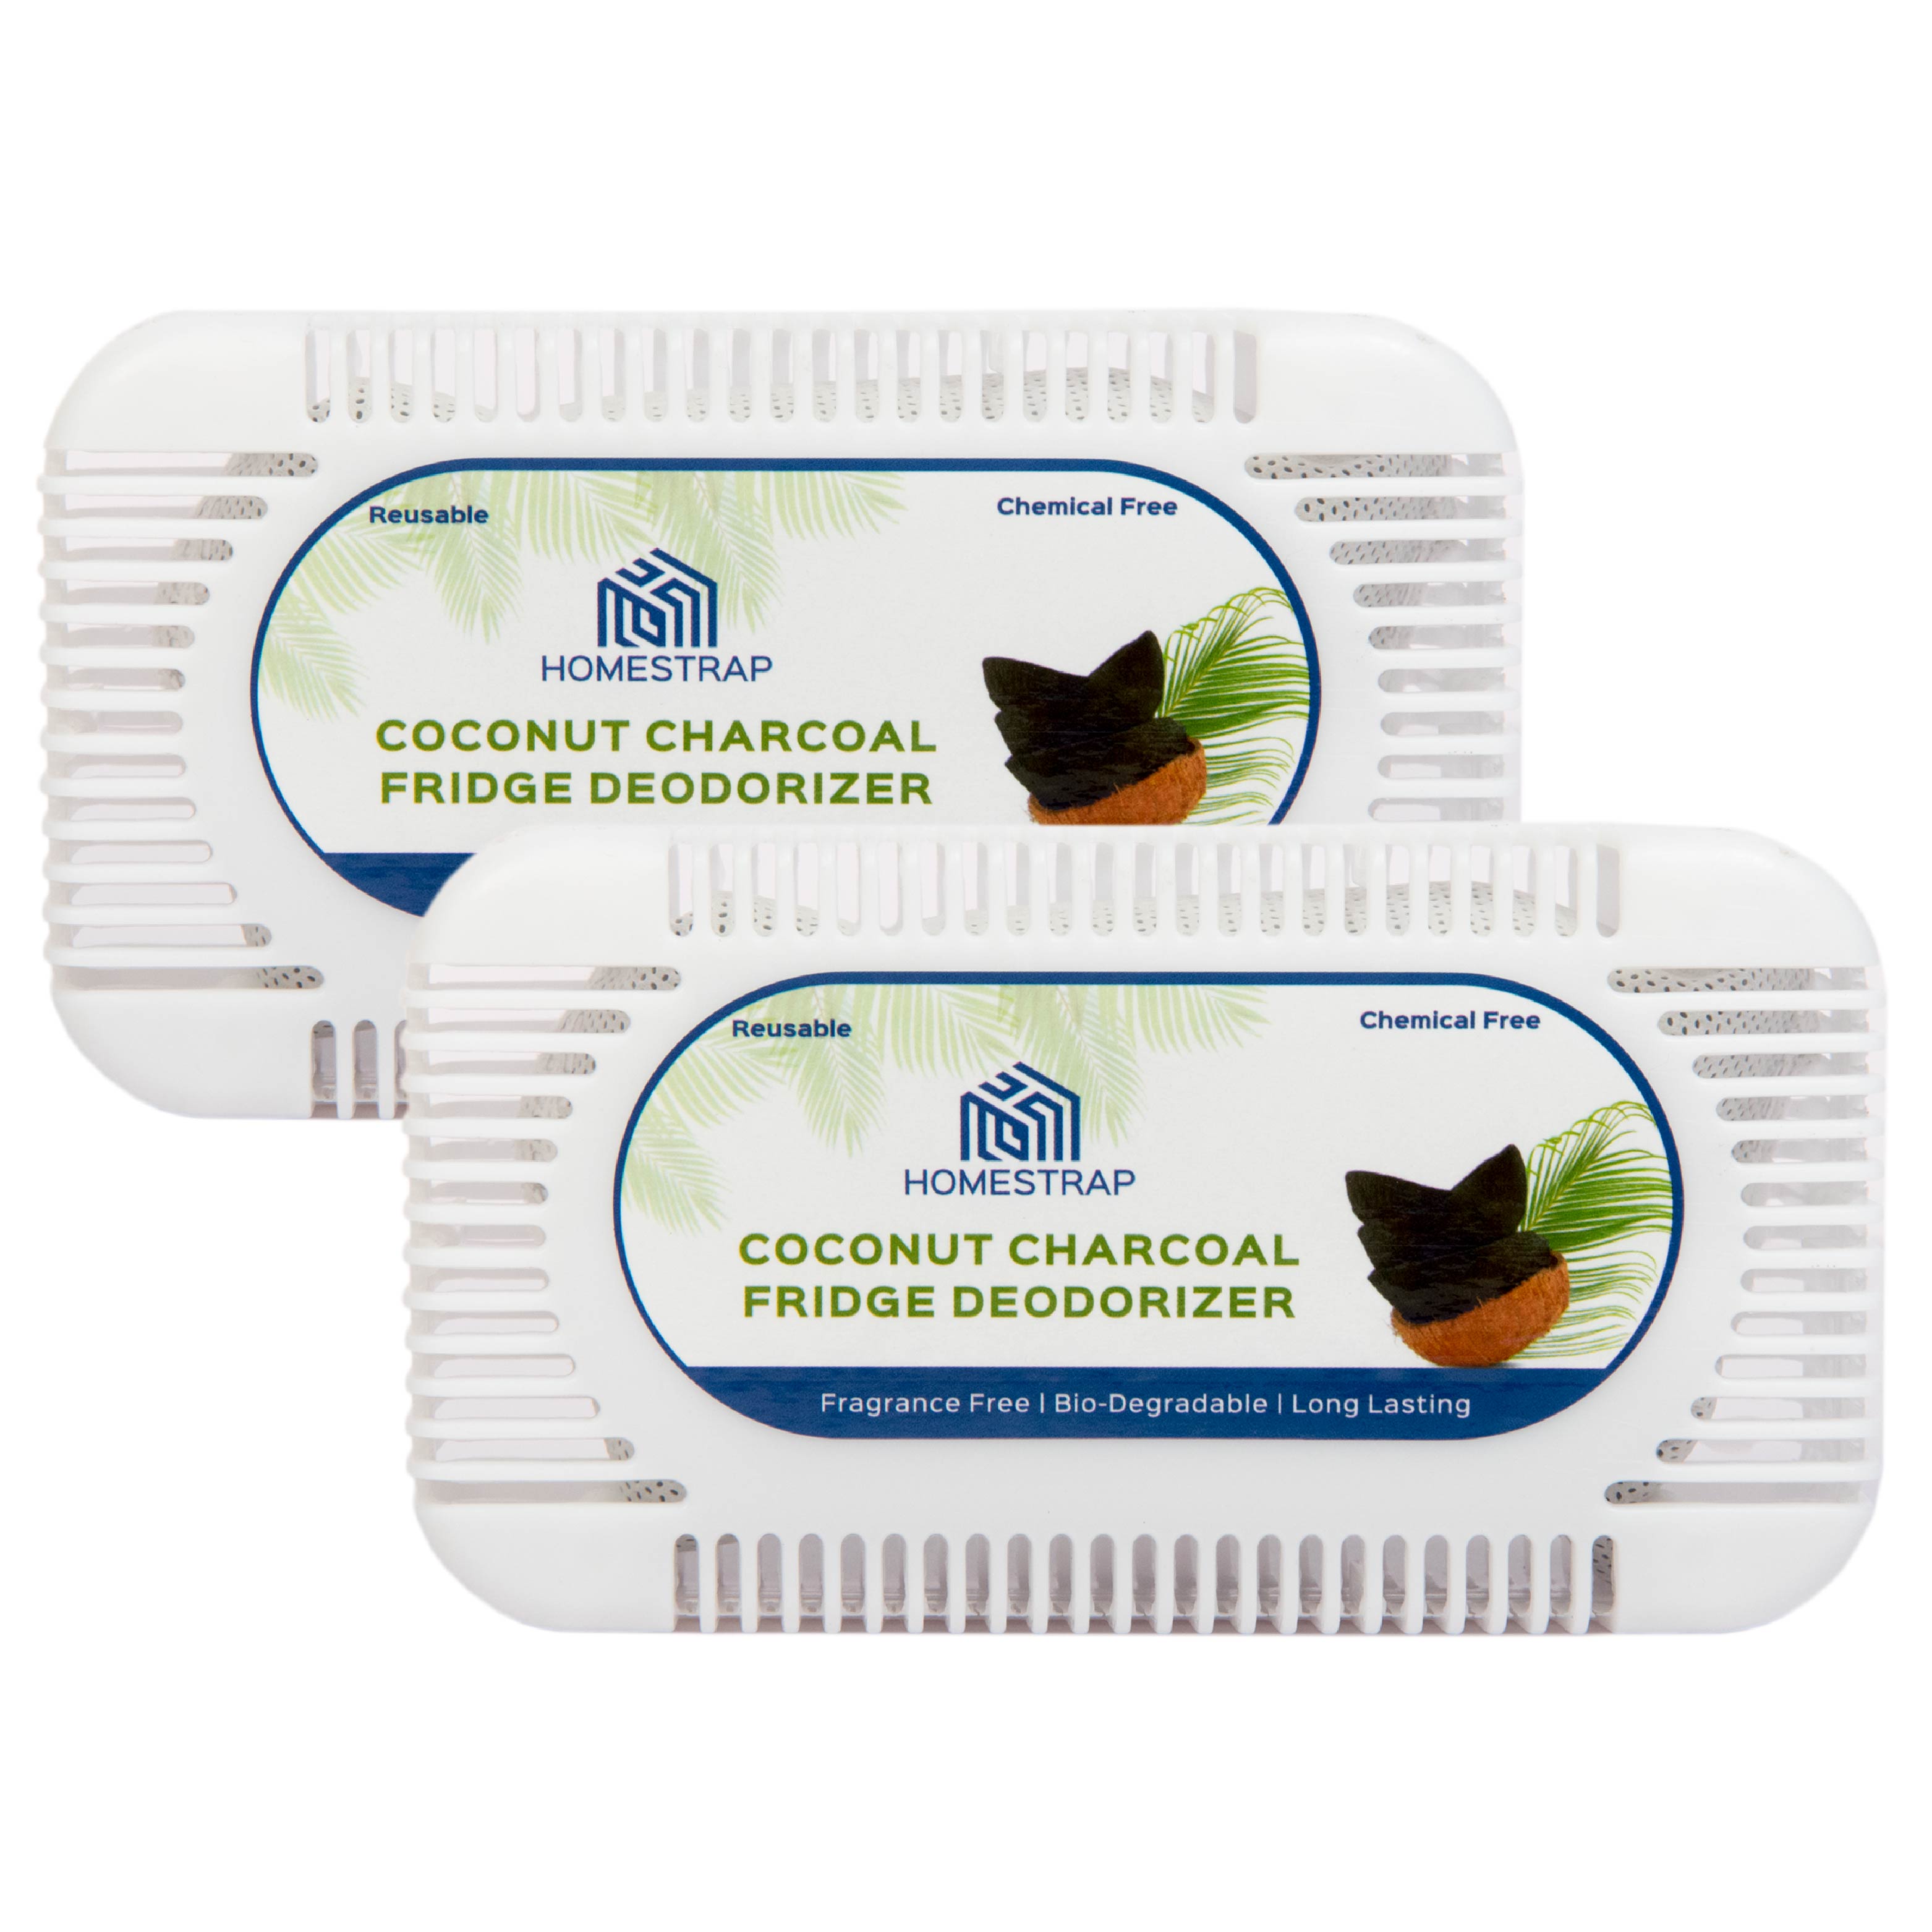 Coconut Charcoal Fridge Deodorizer 60 Gram | Natural Odor Absorber for your Refrigerator